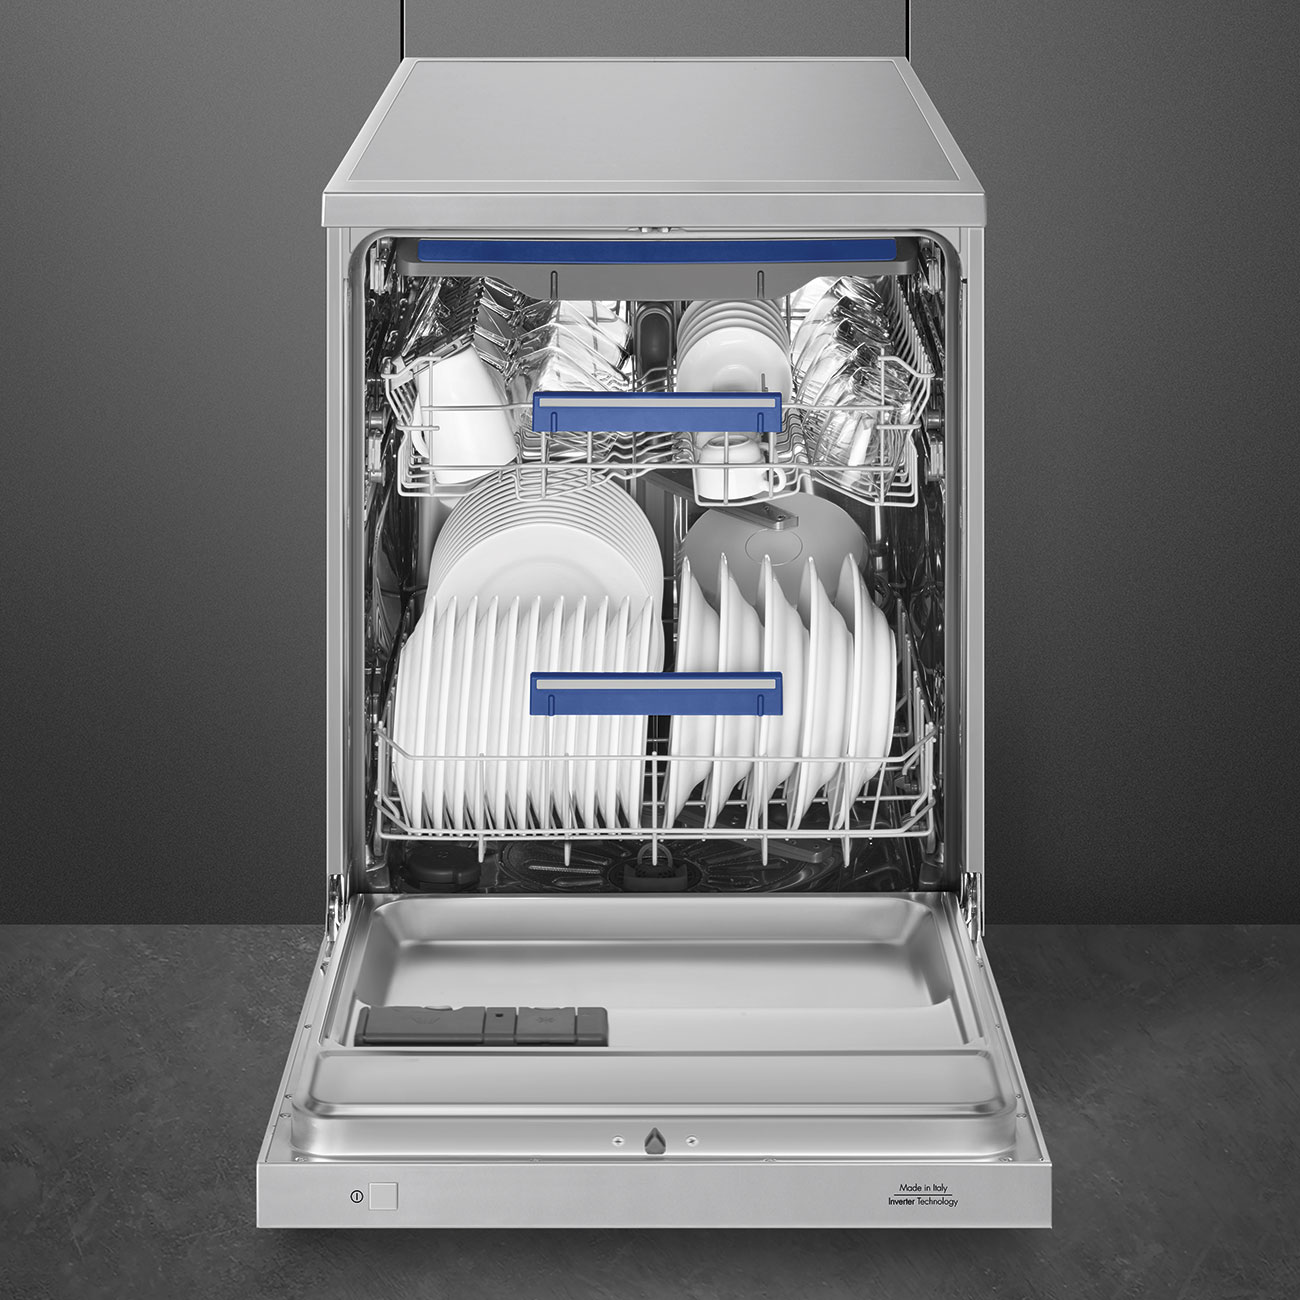 Free-standing dishwasher 60 cm Smeg_3